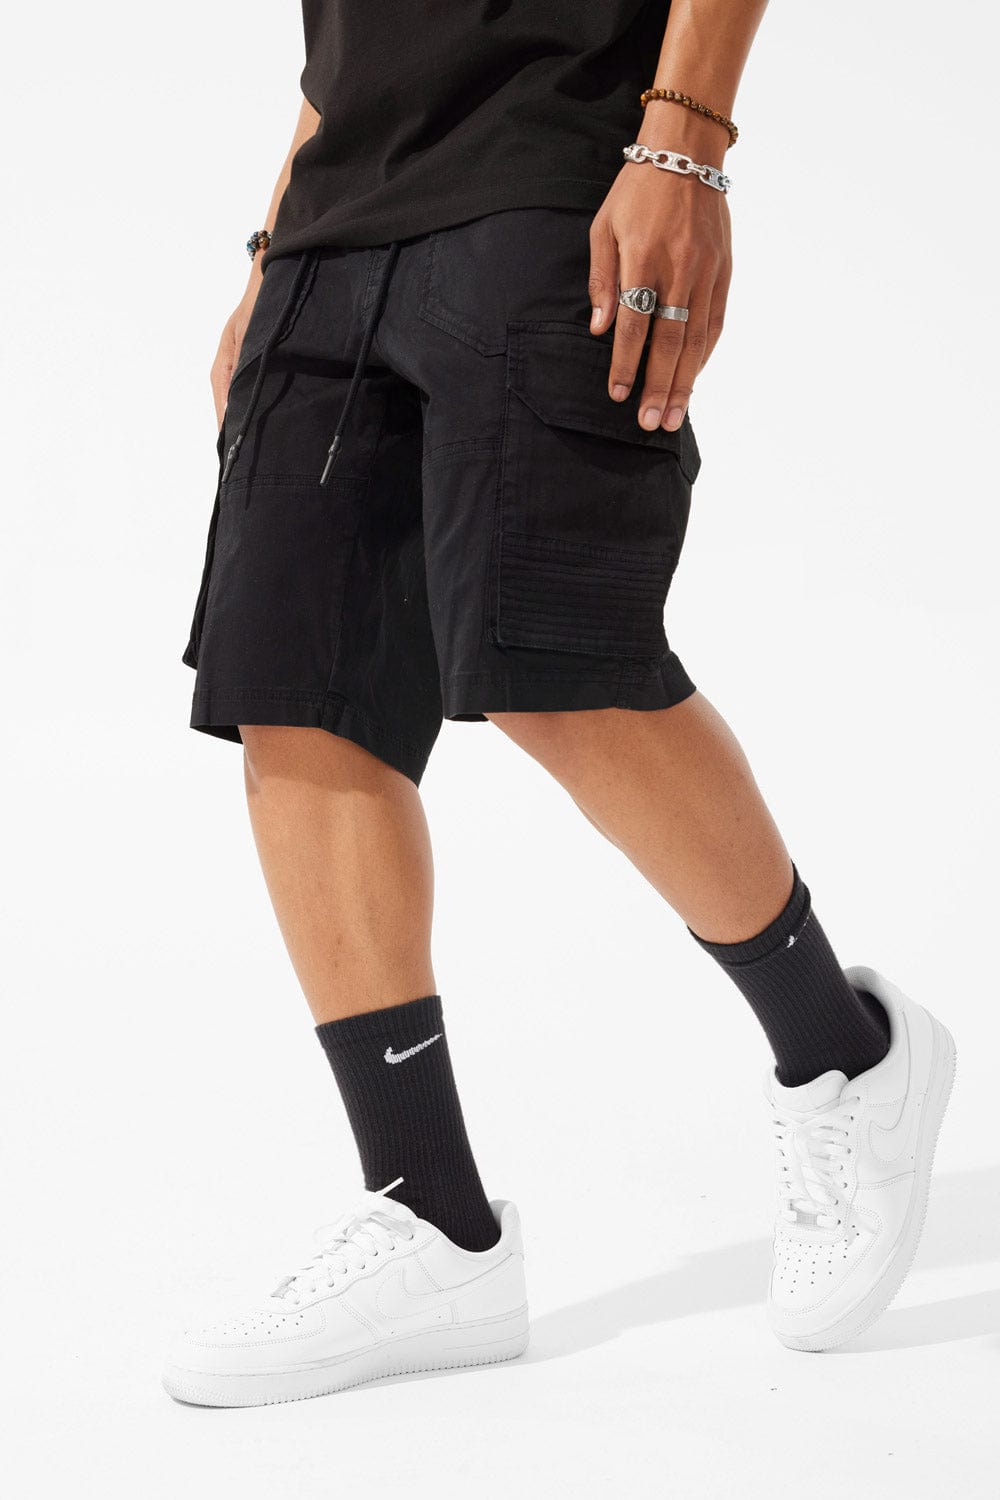 Jordan Craig OG - Ripstop Cargo Shorts Black / 30